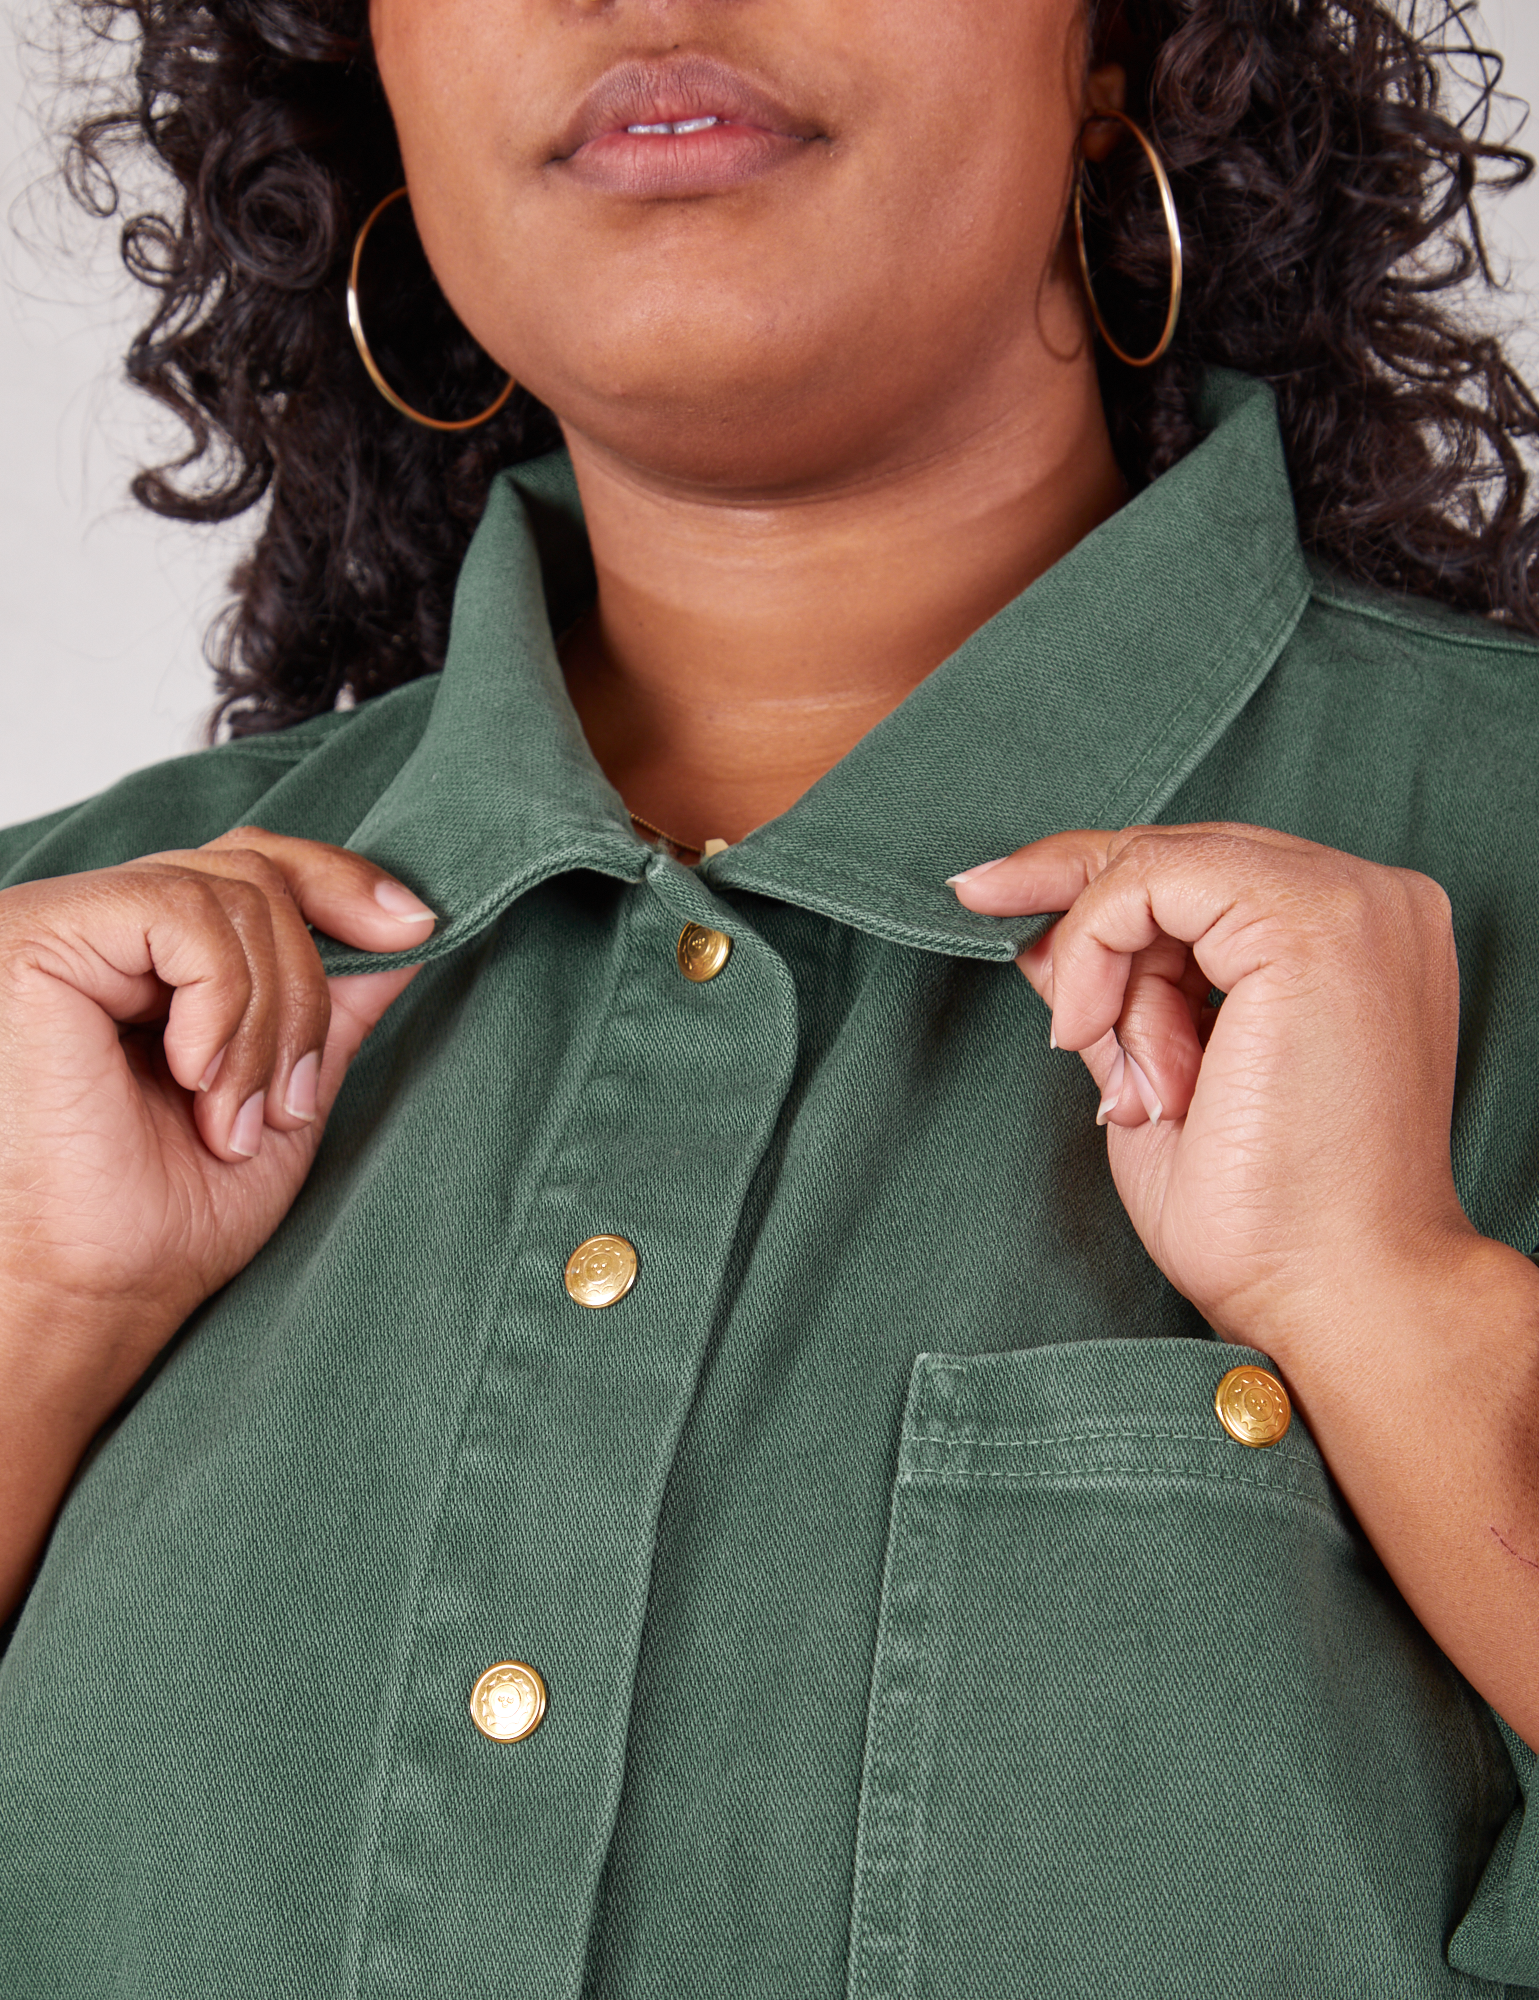 Denim Work Jacket in Dark Emerald Green front close up on Morgan holding collar